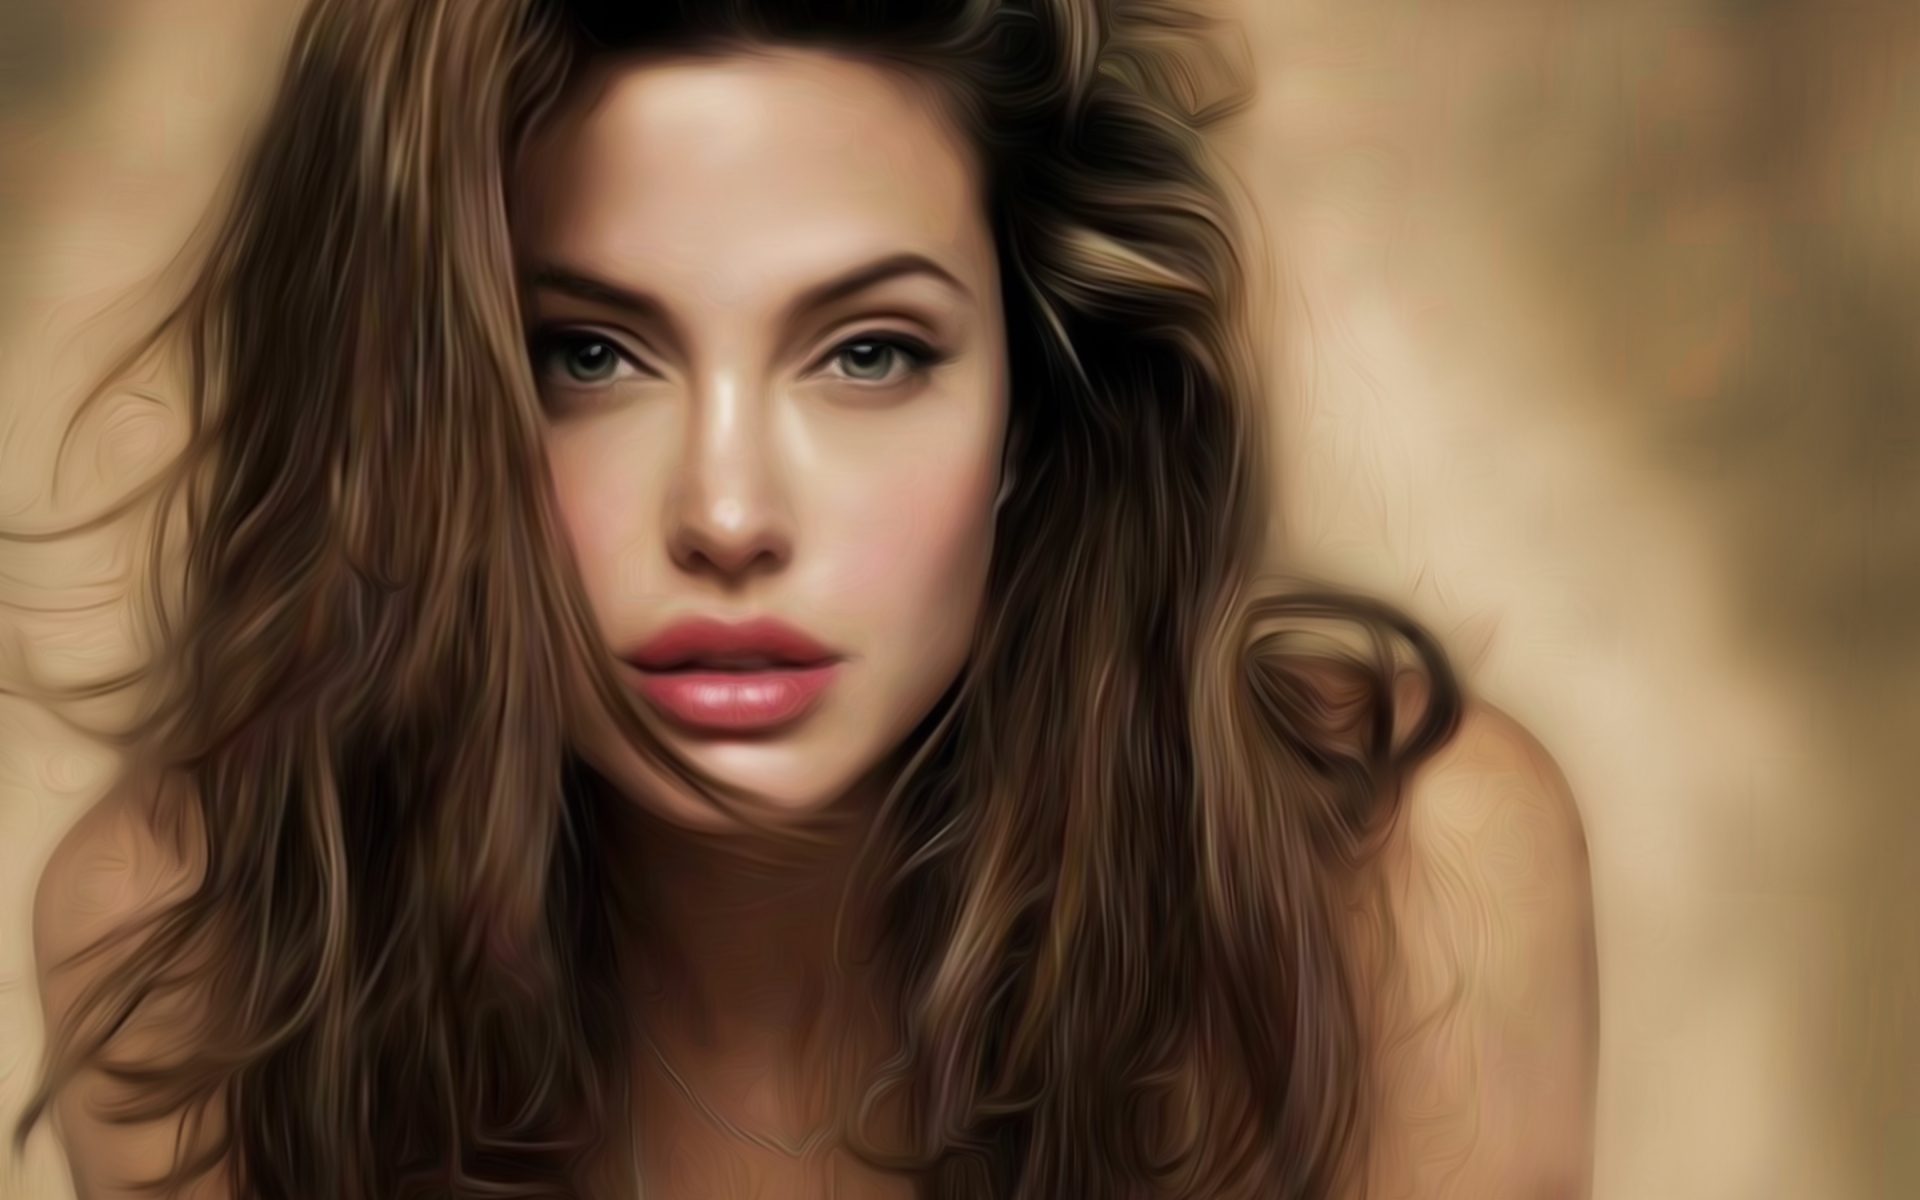 Angelina Jolie Look Art for 1920 x 1200 widescreen resolution